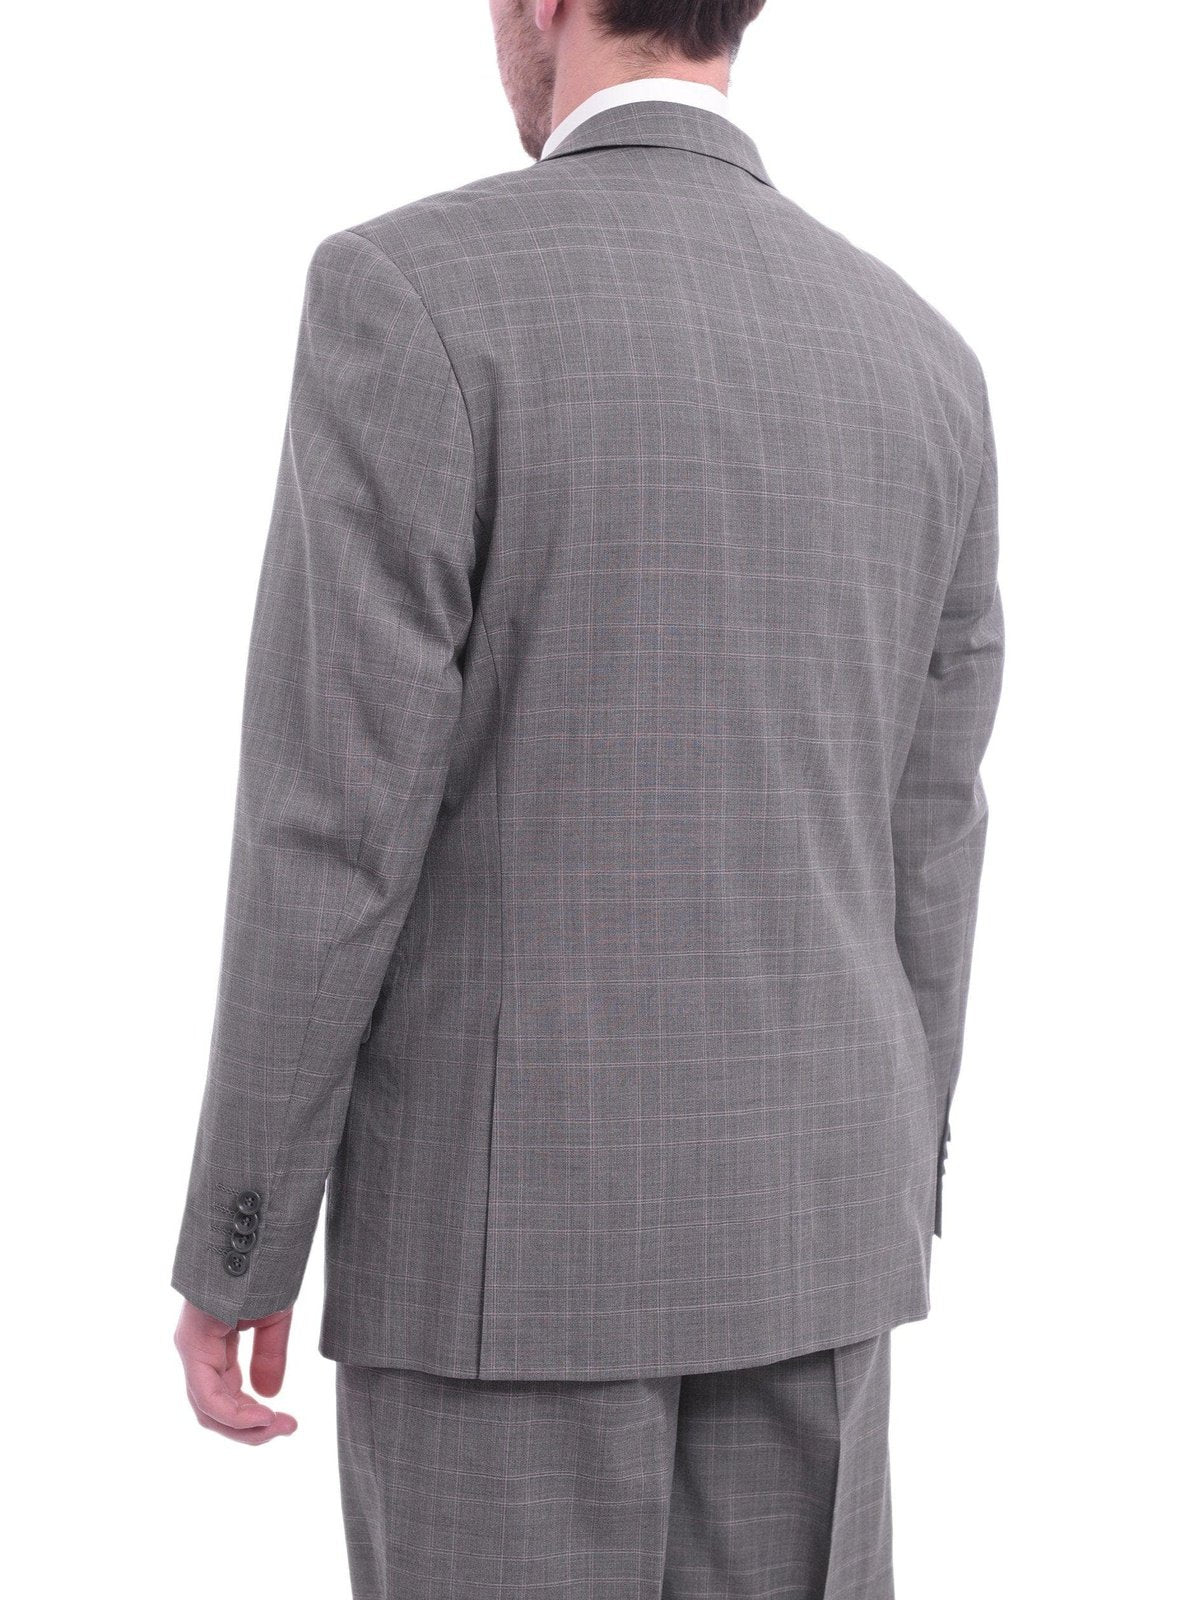 Prontomoda Sale Suits Prontomoda Europa Classic Fit Heather Gray Windowpane Wool Suit